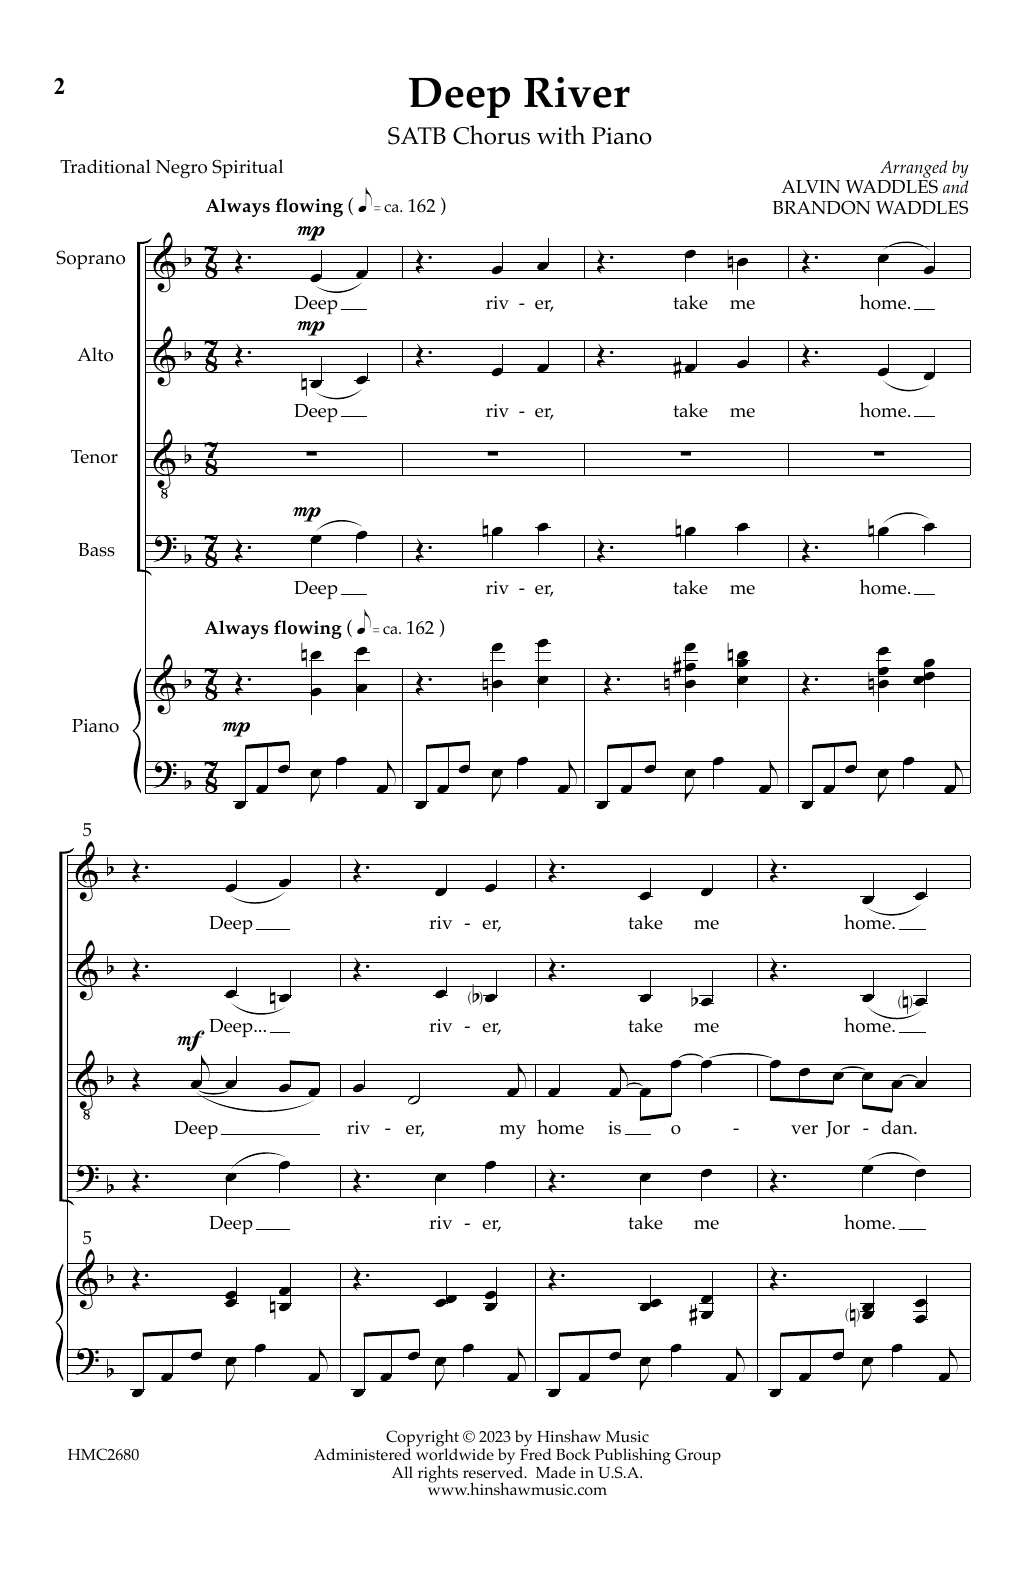 Alvin Waddles & Brandon Waddles Deep River Sheet Music Notes & Chords for SATB Choir - Download or Print PDF